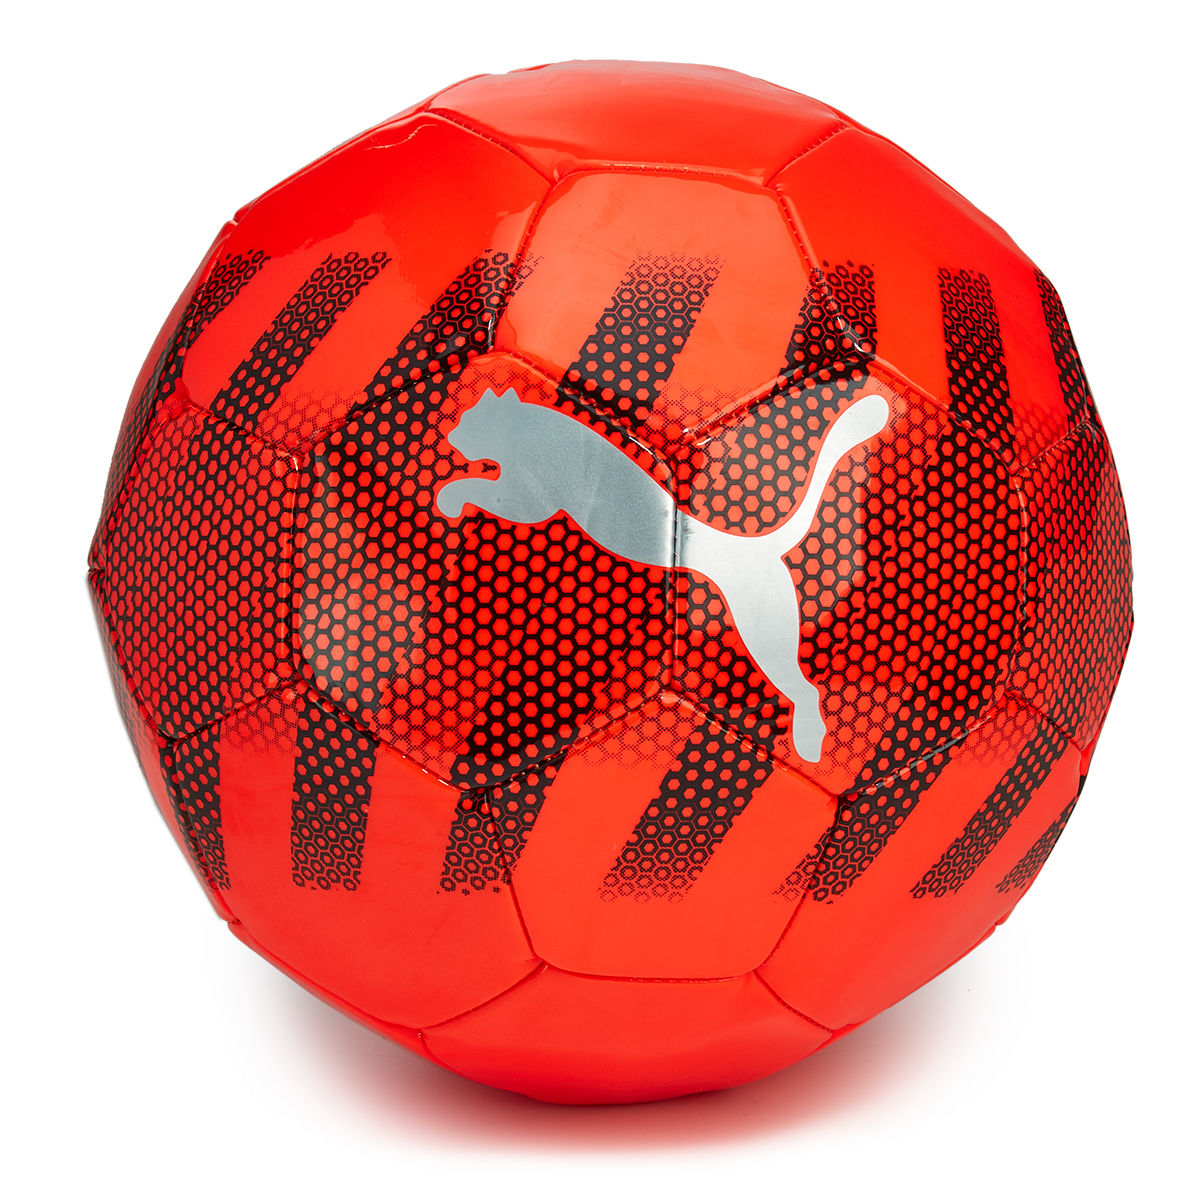 Puma Spirit Soccer Ball - Red, 4